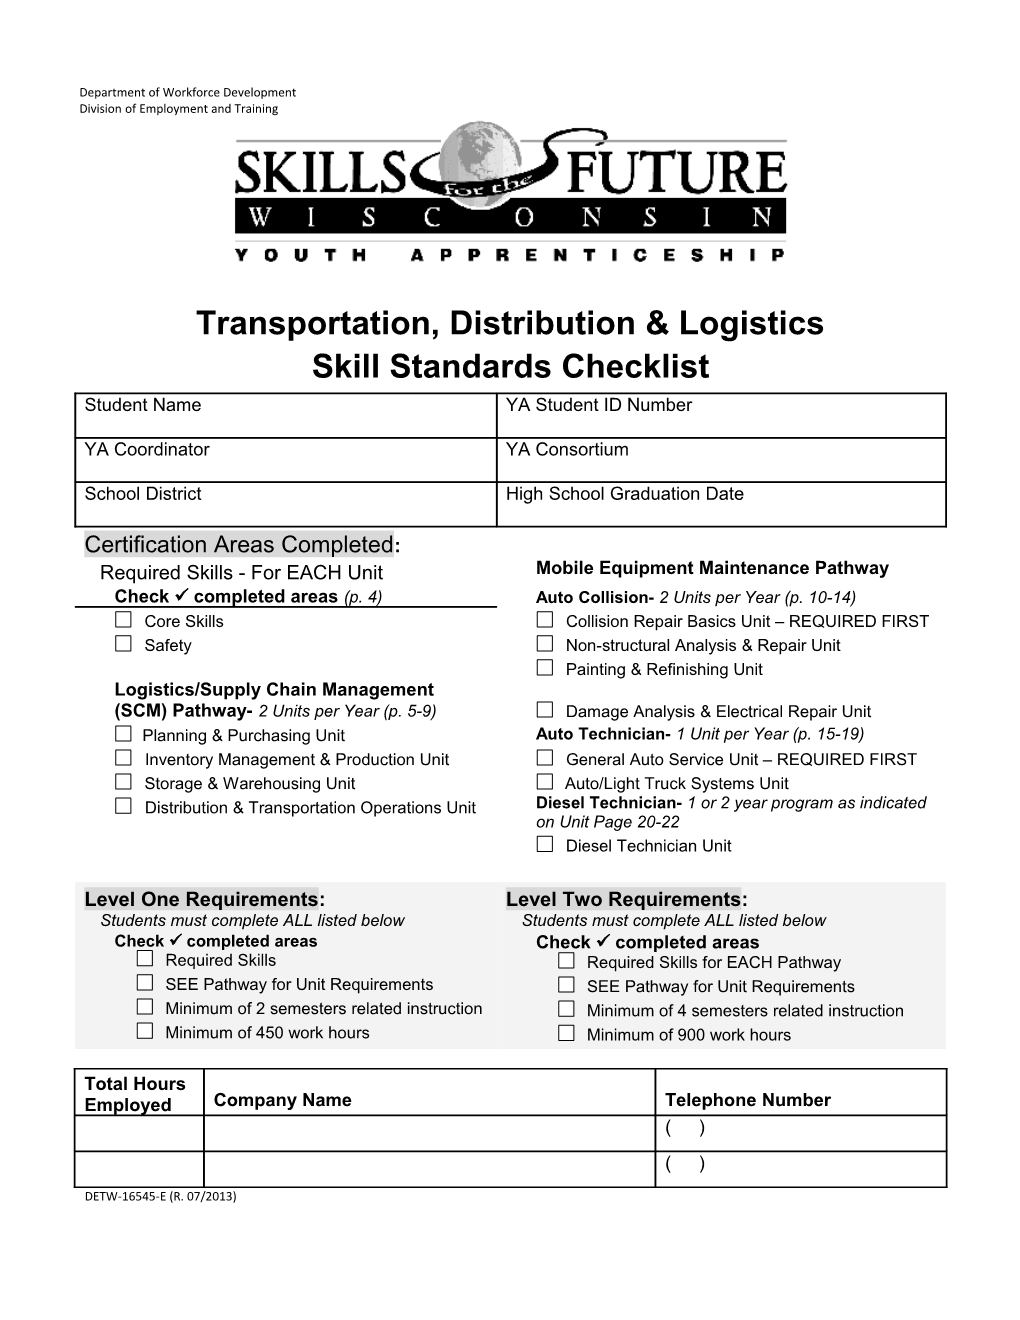 Transportation, Distribution & Logistics Skill Standards Checklist, DETW-16545-E